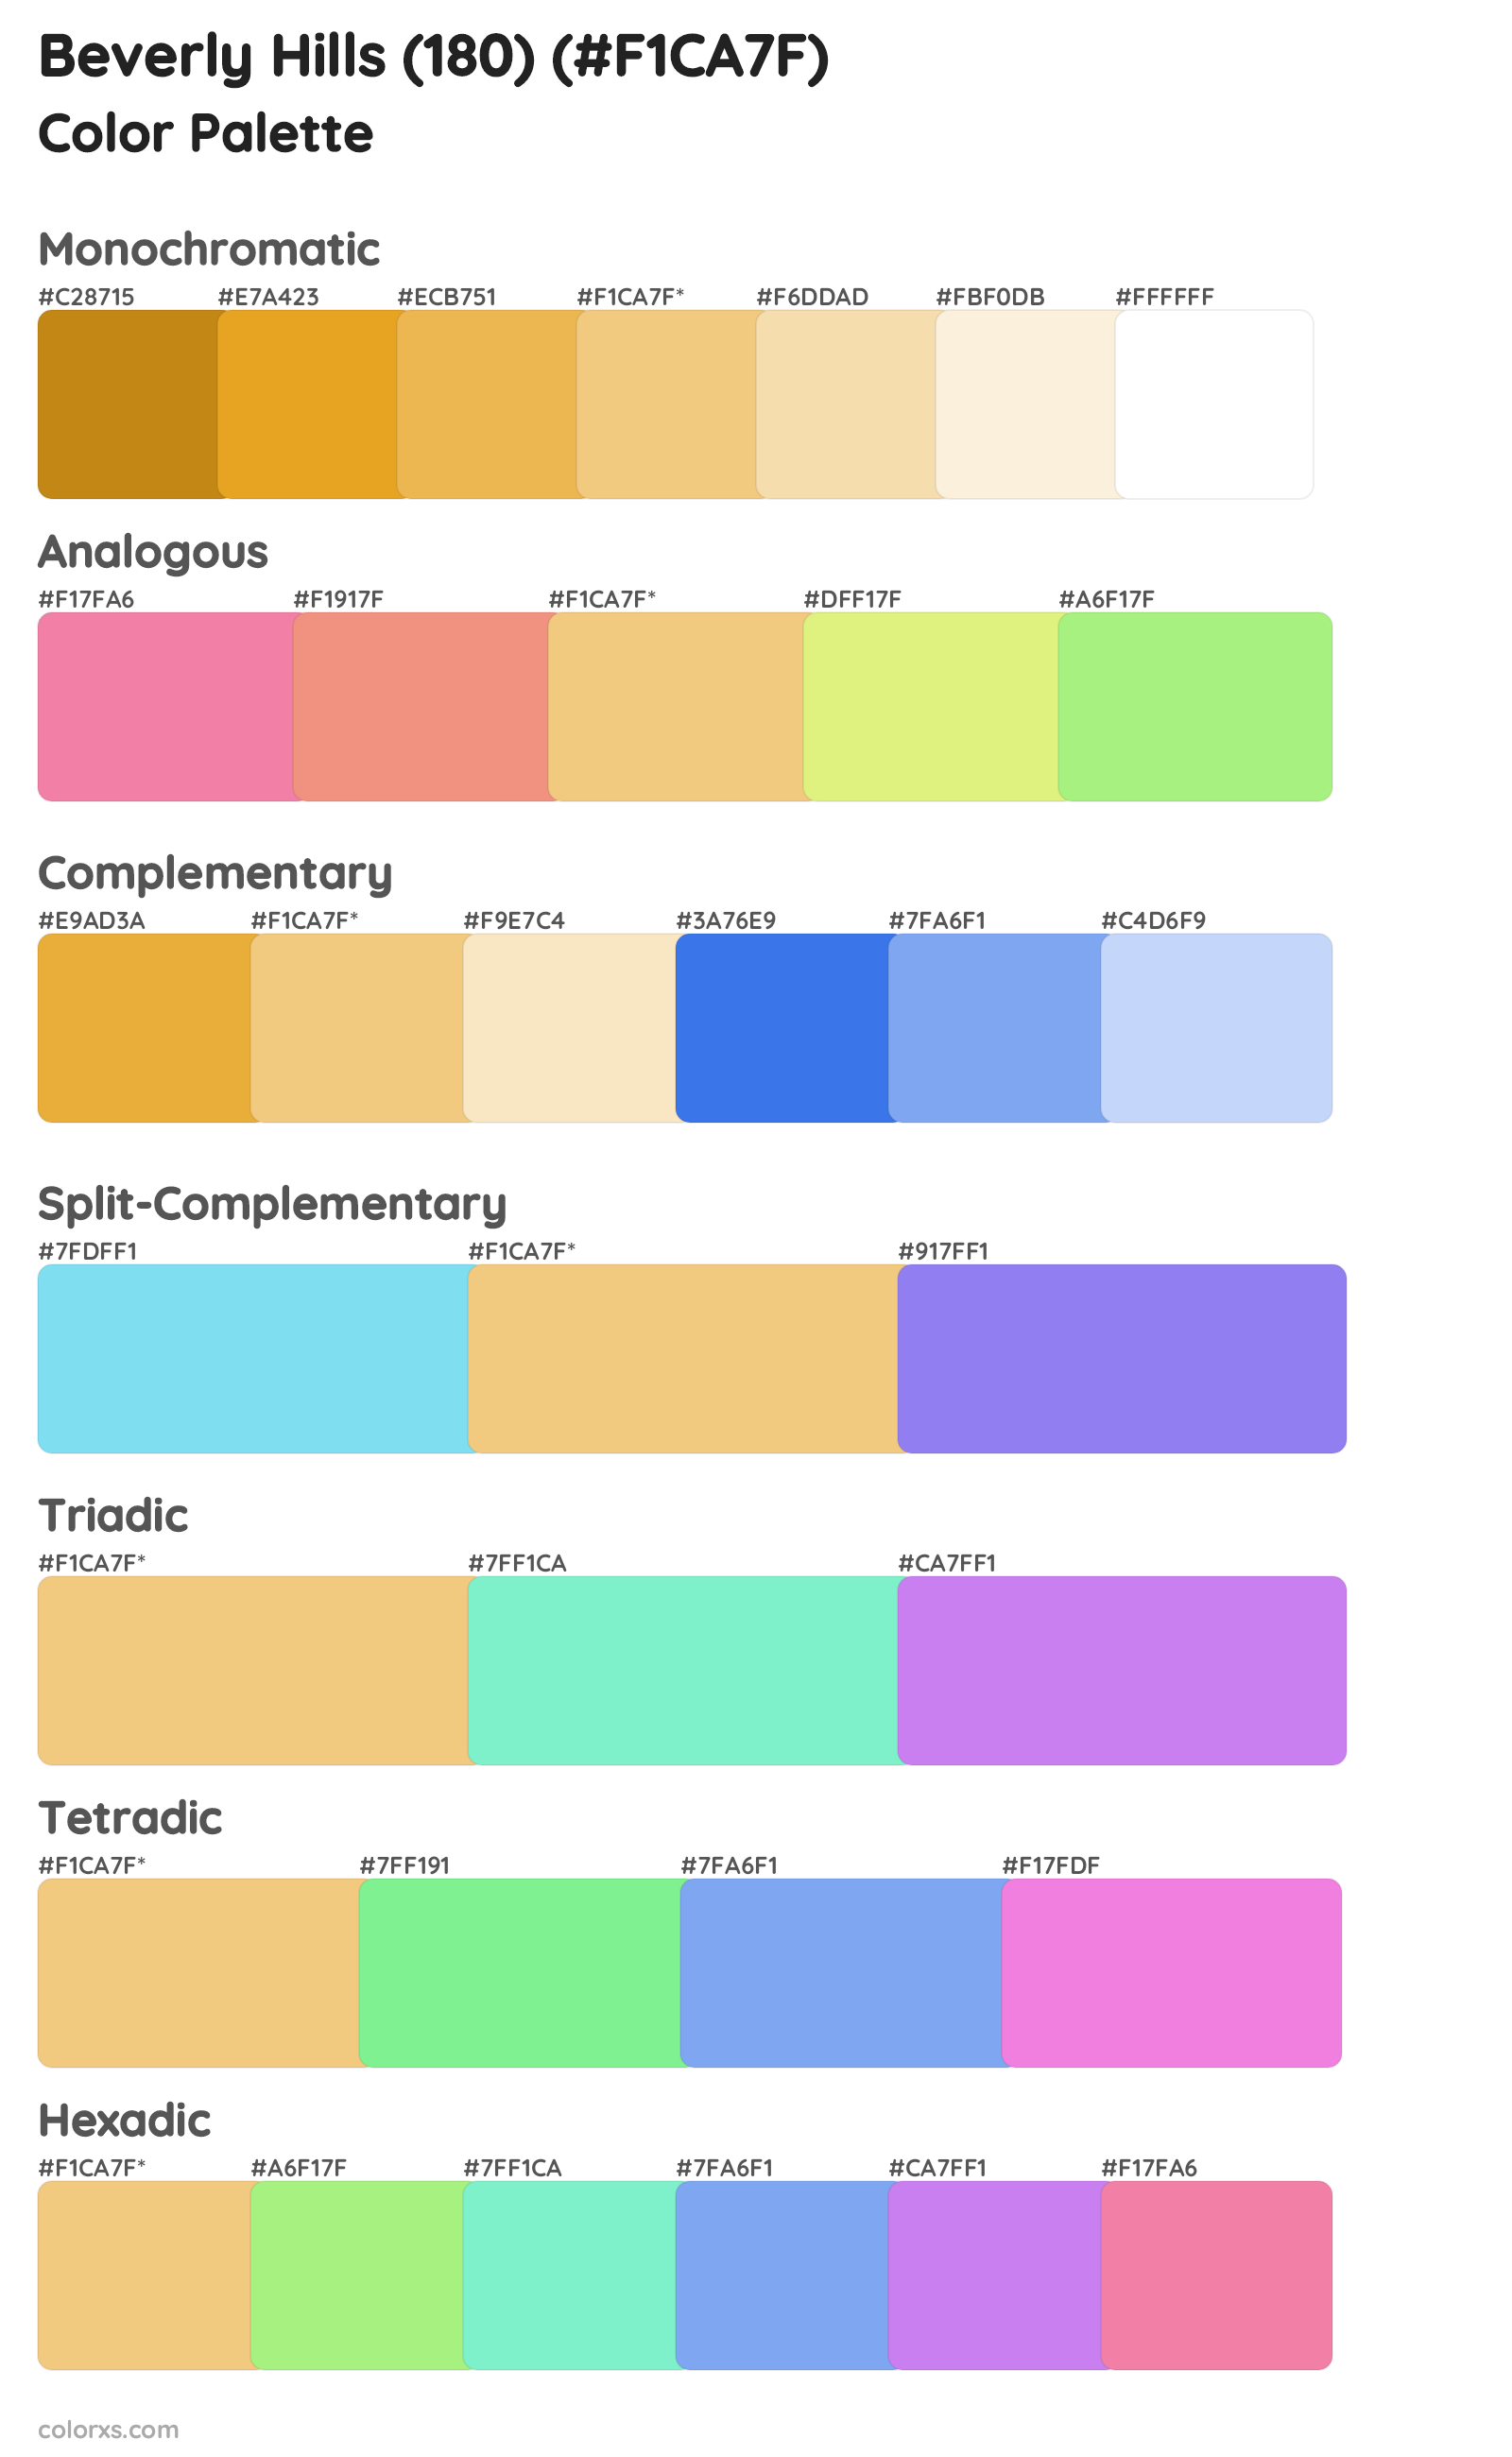 Beverly Hills (180) Color Scheme Palettes